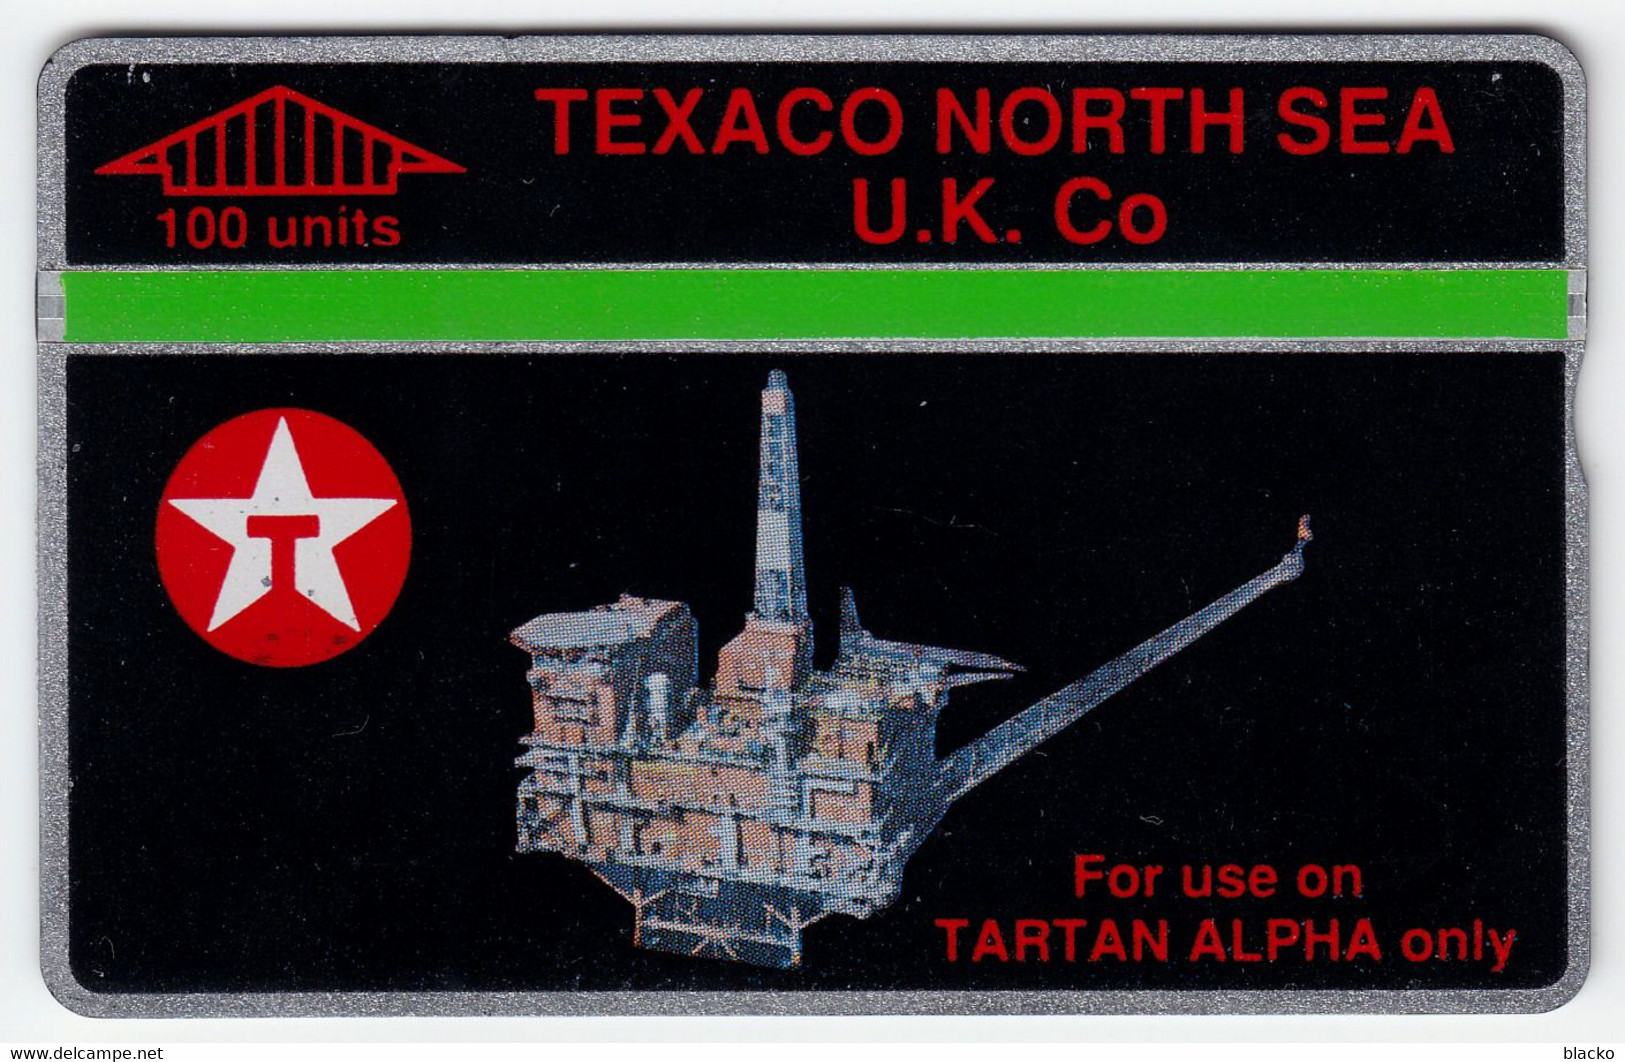 United Kingdom - Oilrig - 1996 068E Texaco North Sea UK Co. Black Card - Tartan Alpha - 17968ex Dbz04 - [ 2] Oil Drilling Rig